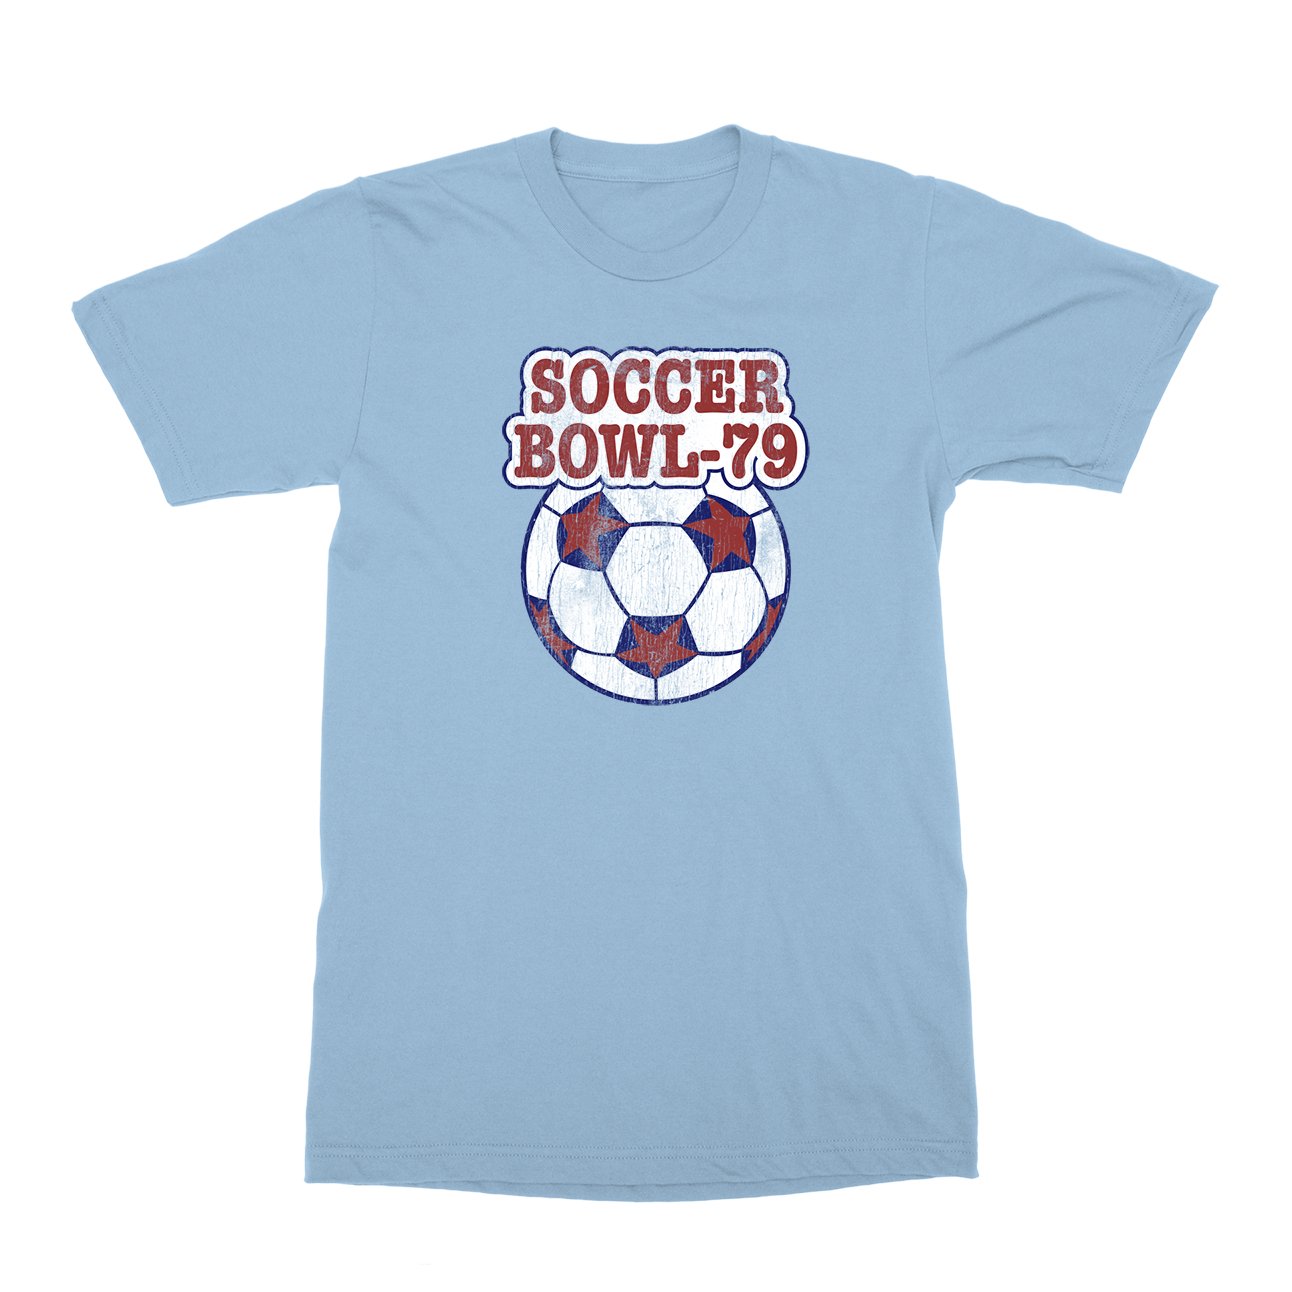 Soccer Bowl 79 T-Shirt - Black Cat MFG -